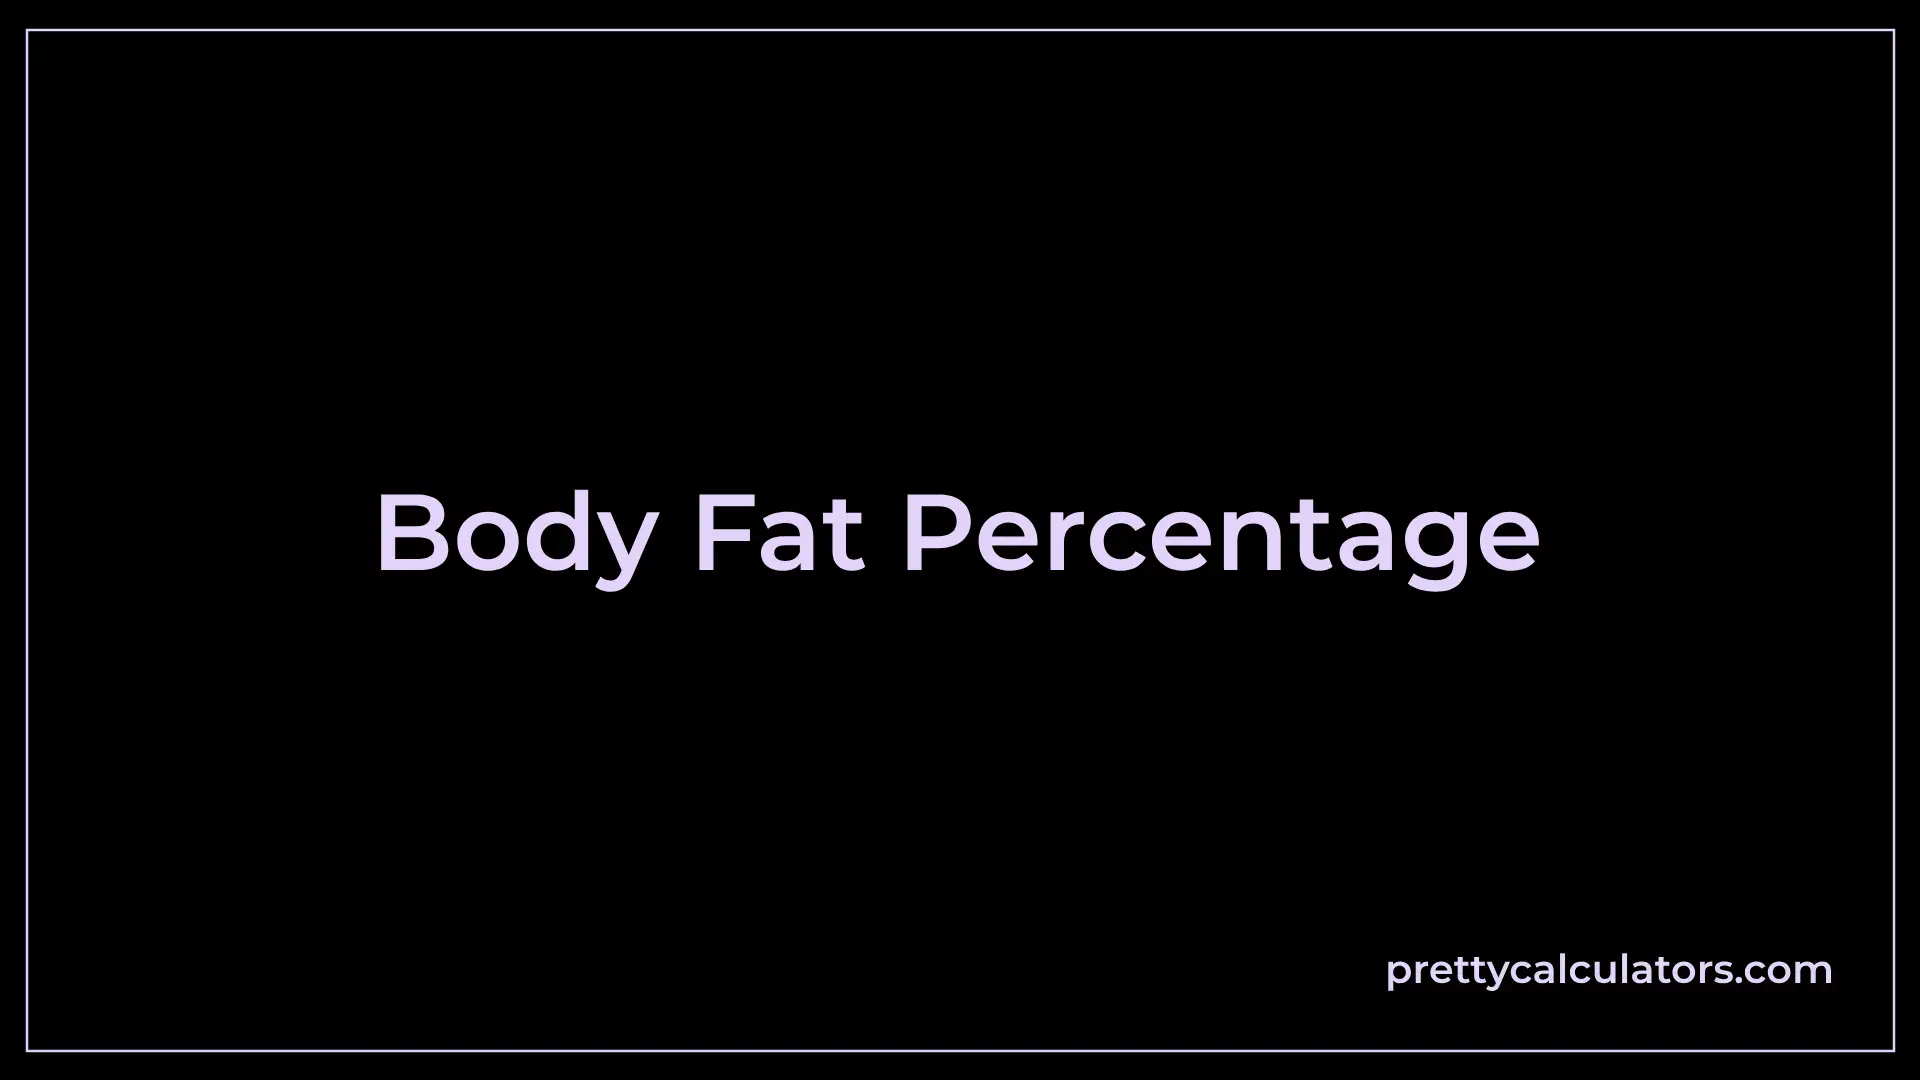 Body Fat Calculator - Know Your Body Fat Percentage [Formula